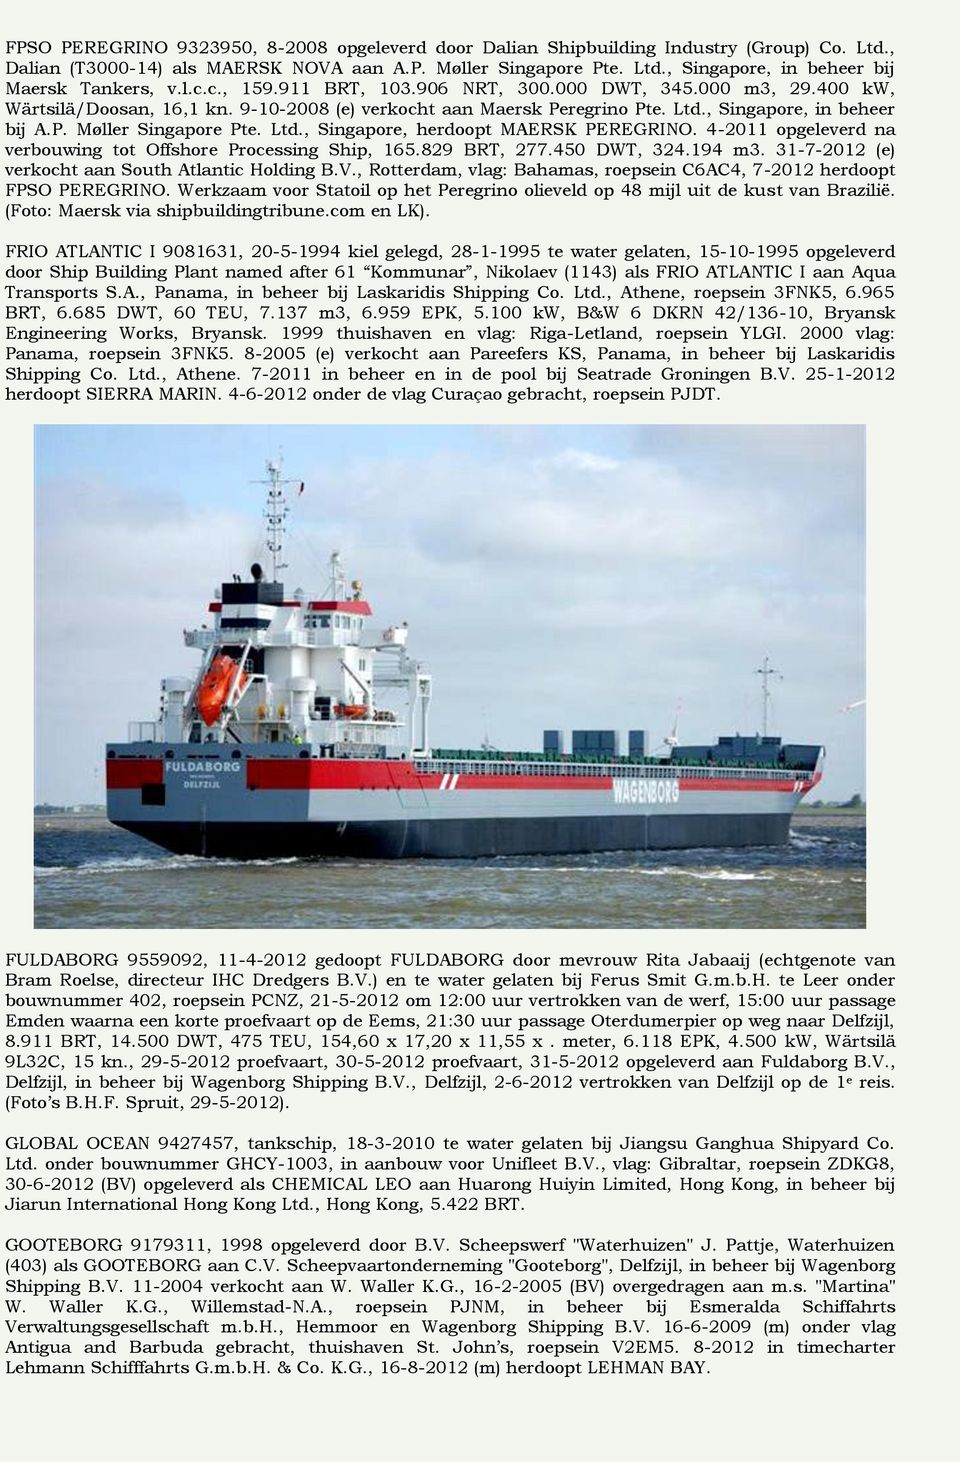 Ltd., Singapore, herdoopt MAERSK PEREGRINO. 4-2011 opgeleverd na verbouwing tot Offshore Processing Ship, 165.829 BRT, 277.450 DWT, 324.194 m3. 31-7-2012 (e) verkocht aan South Atlantic Holding B.V.